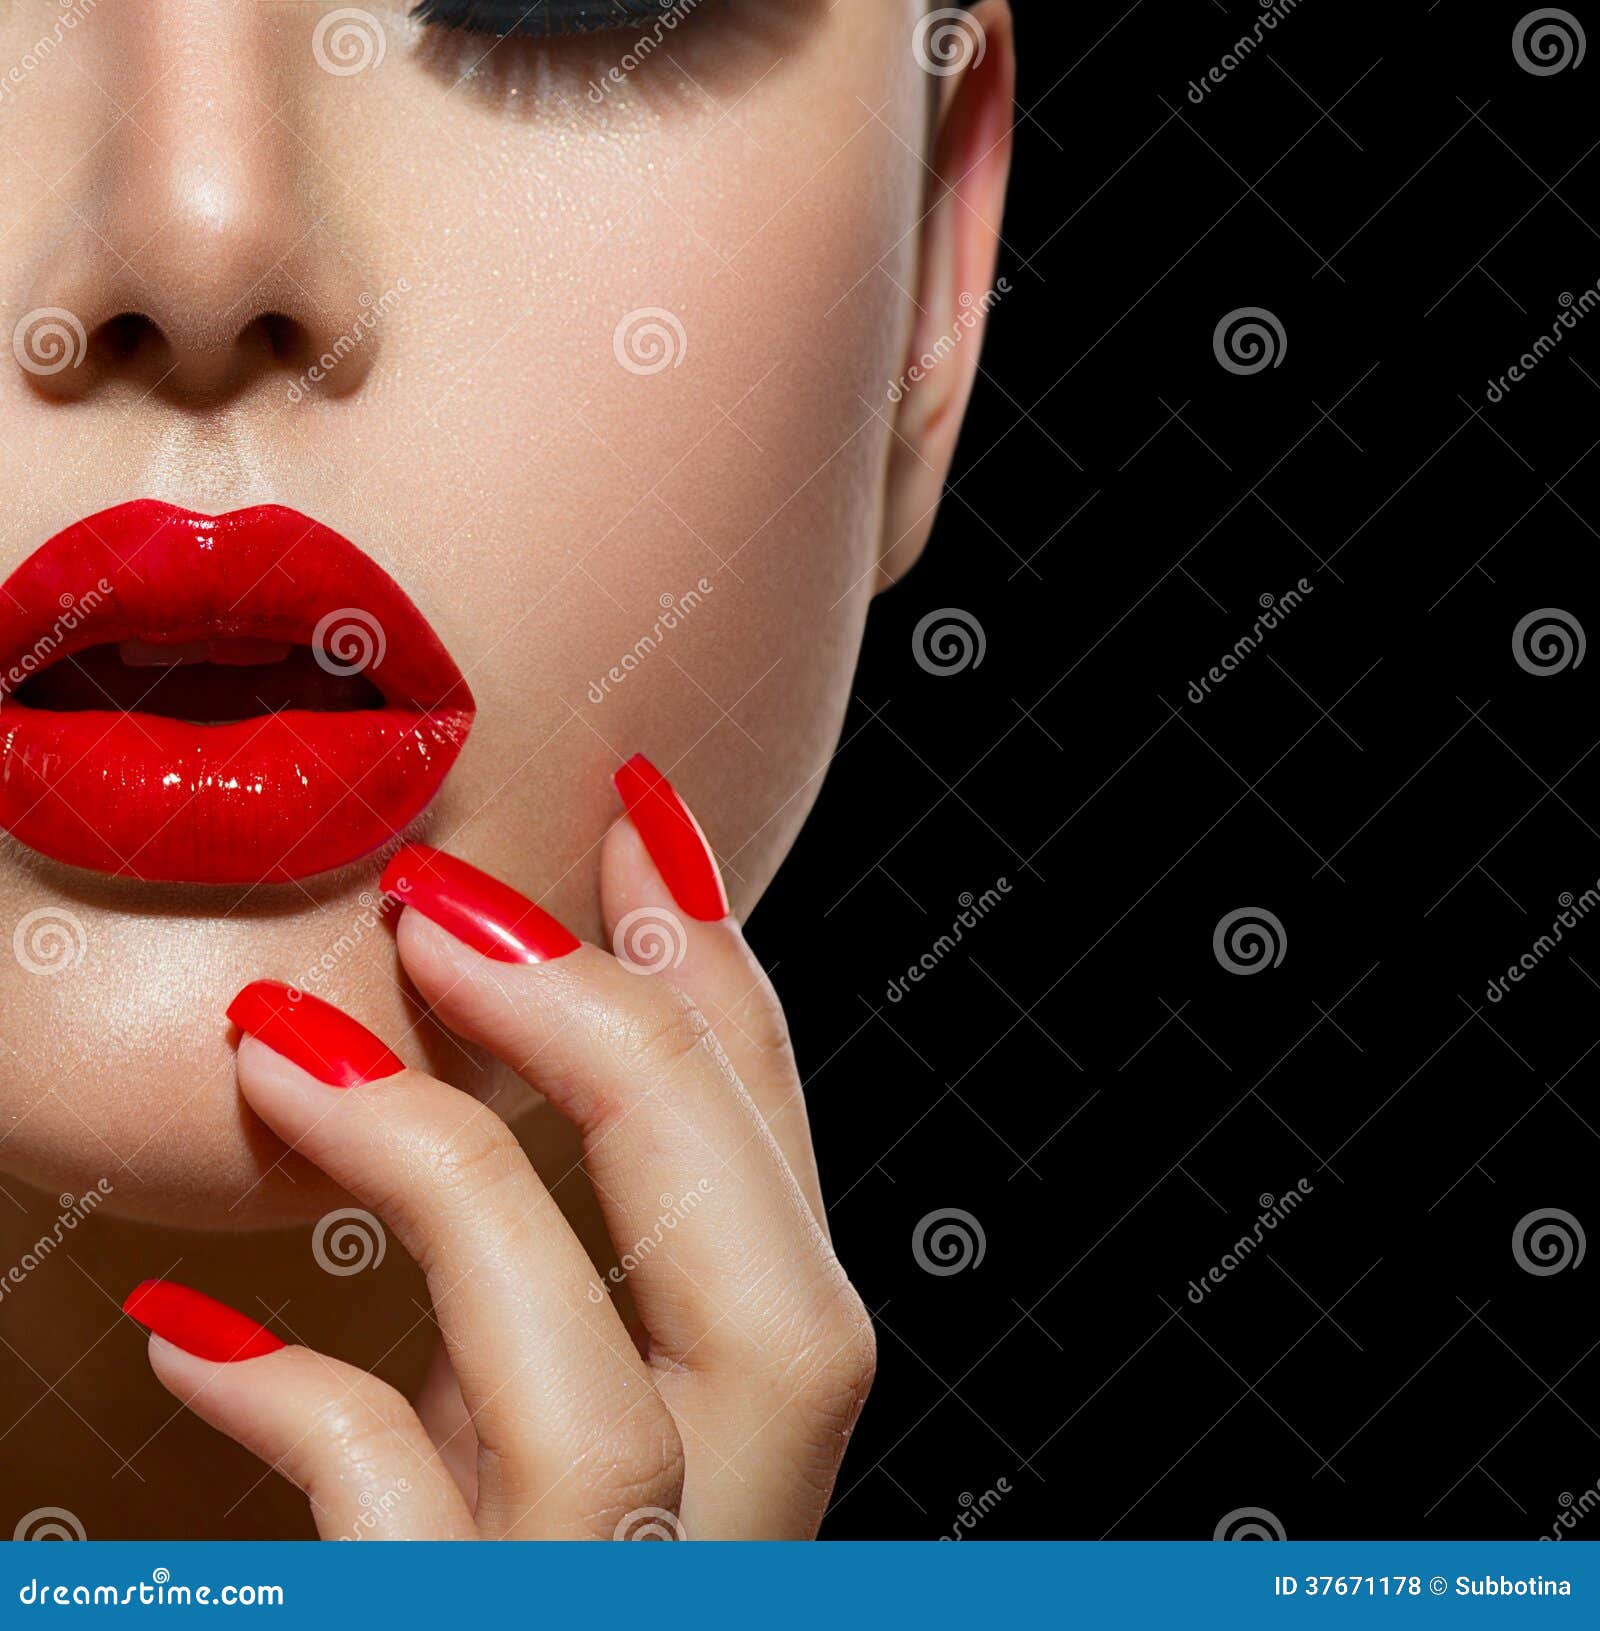 30 Matching nails and lipstick makeups | Art and Design